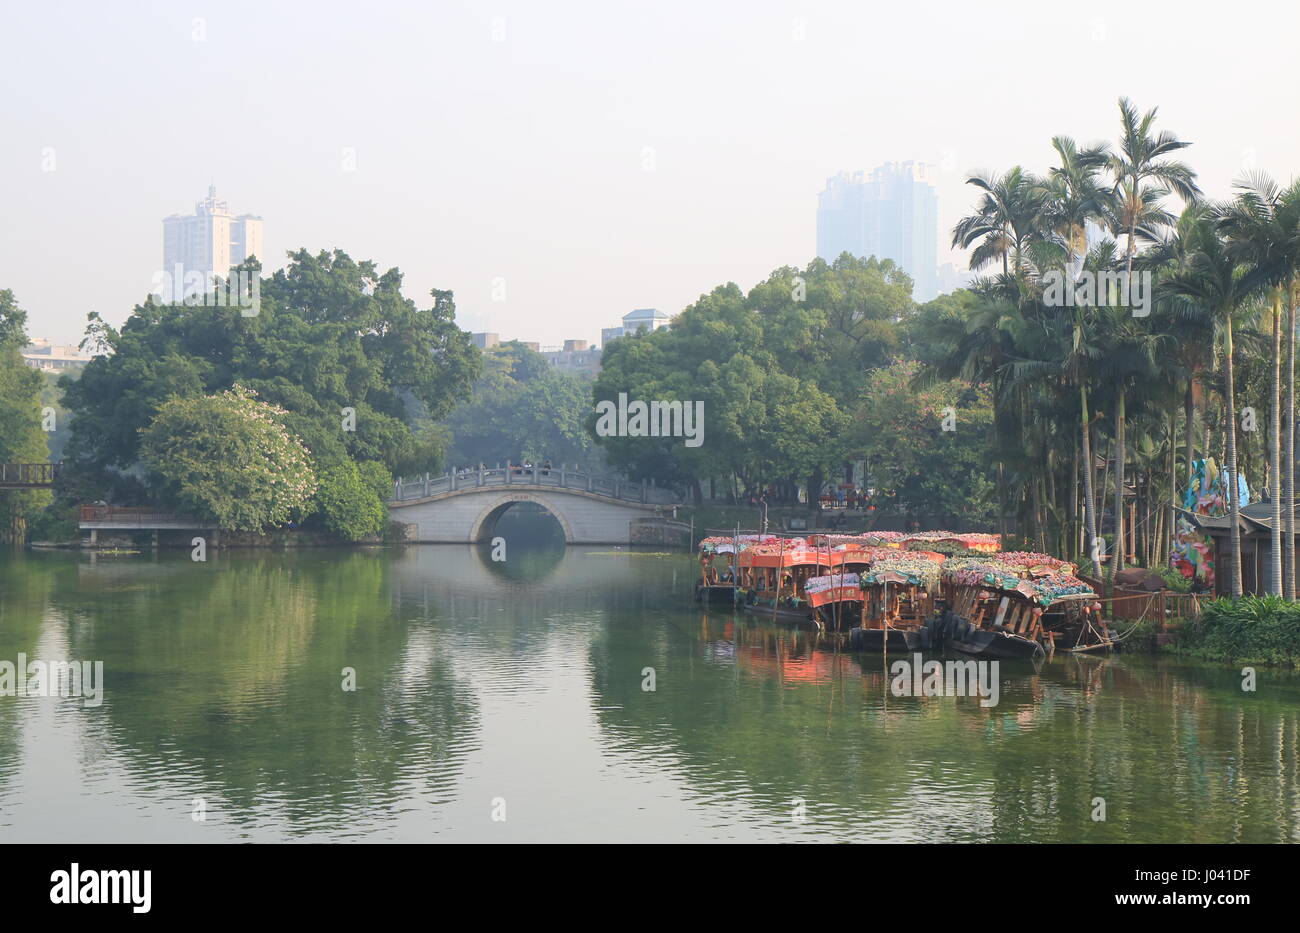 Liwan lake park in Guangzhou China Stock Photo: 137771915 - Alamy